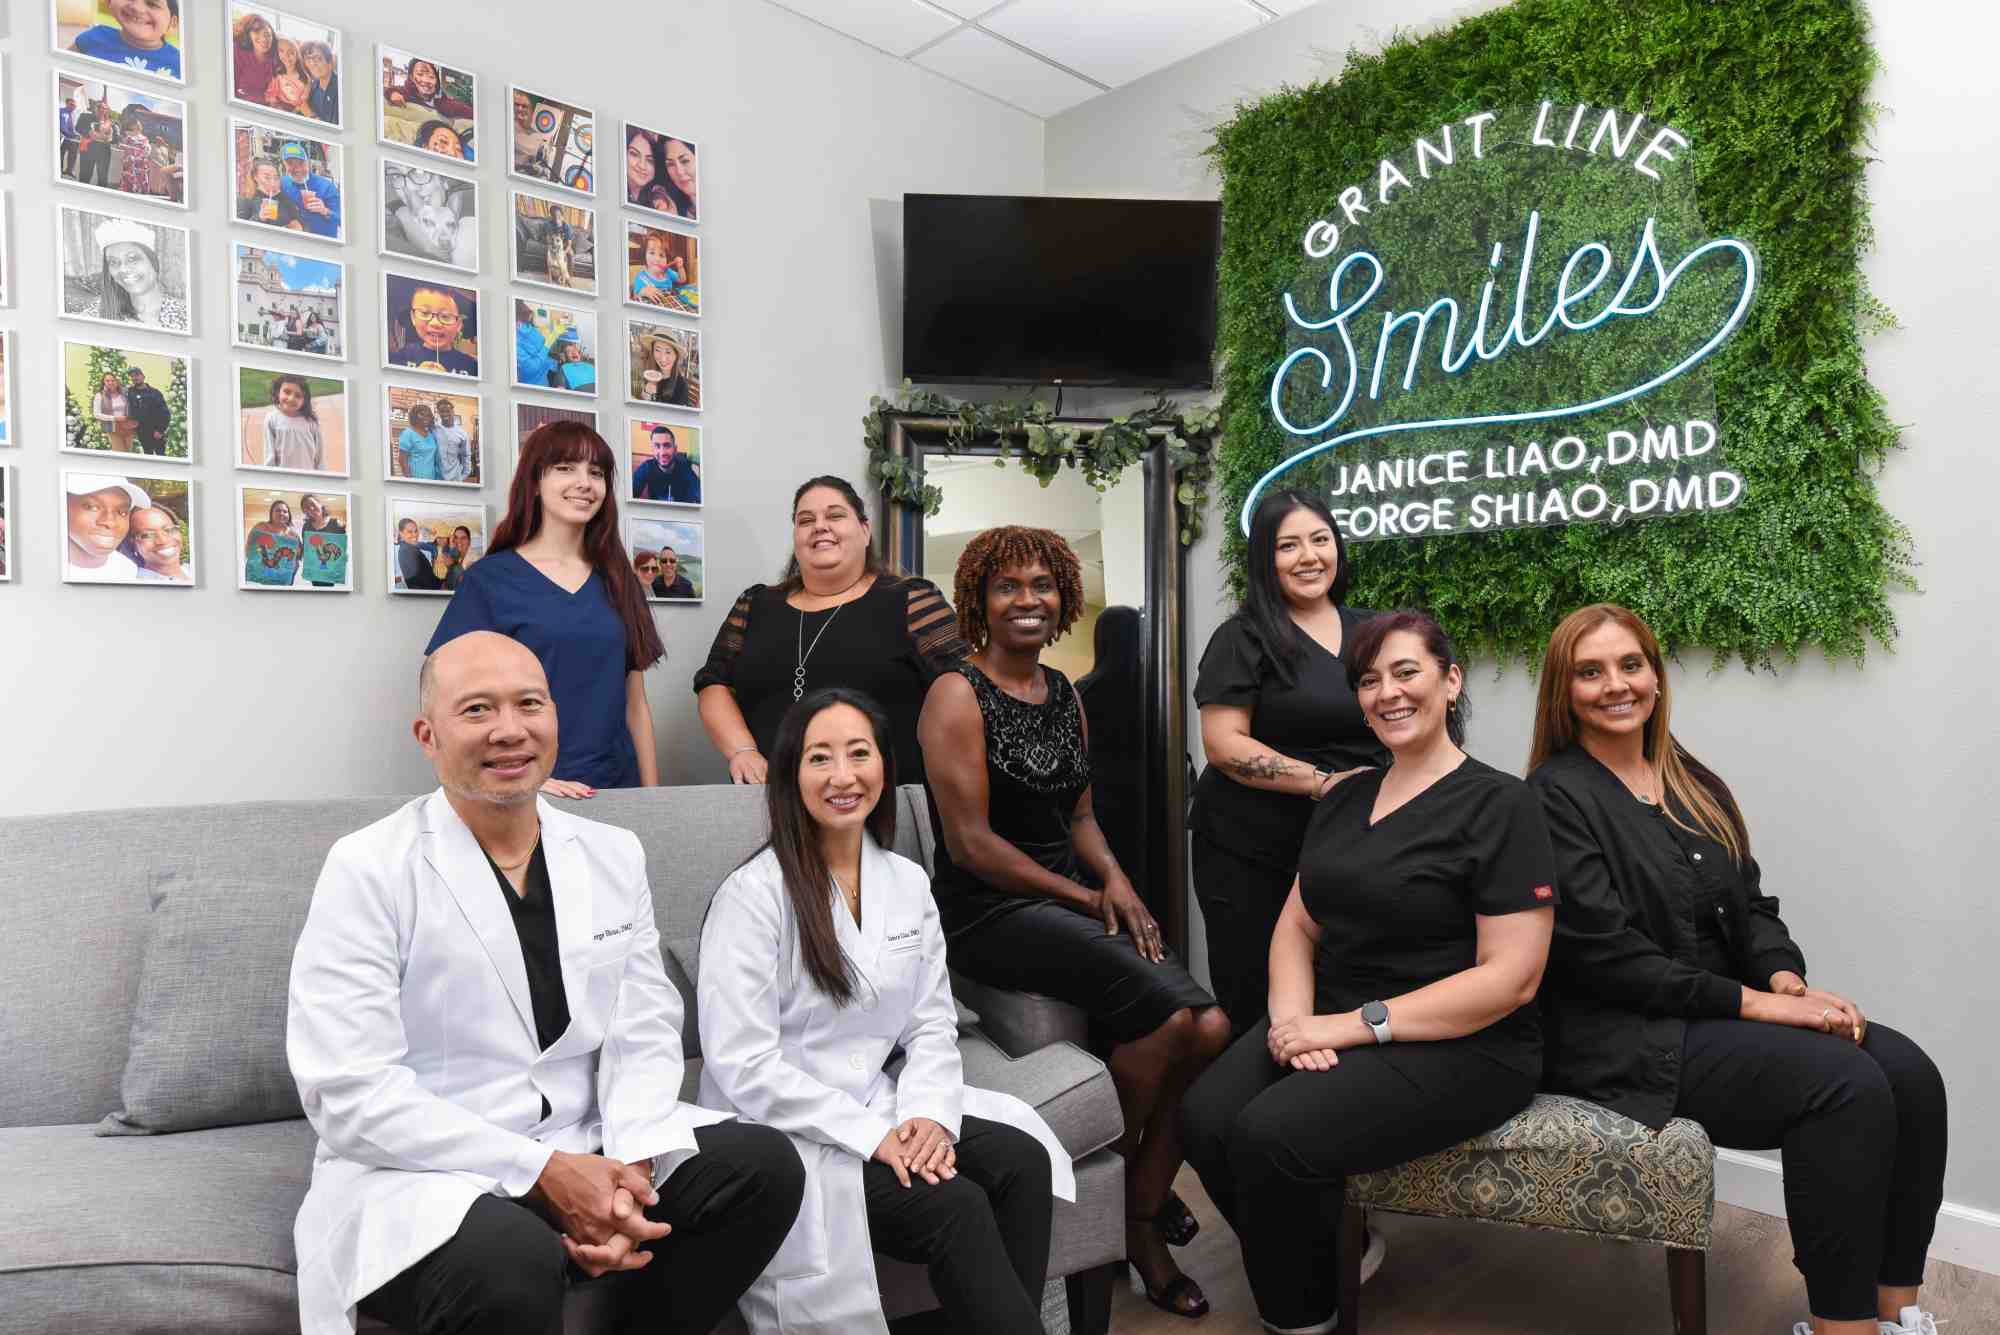 Dublin Smiles Dentistry team members